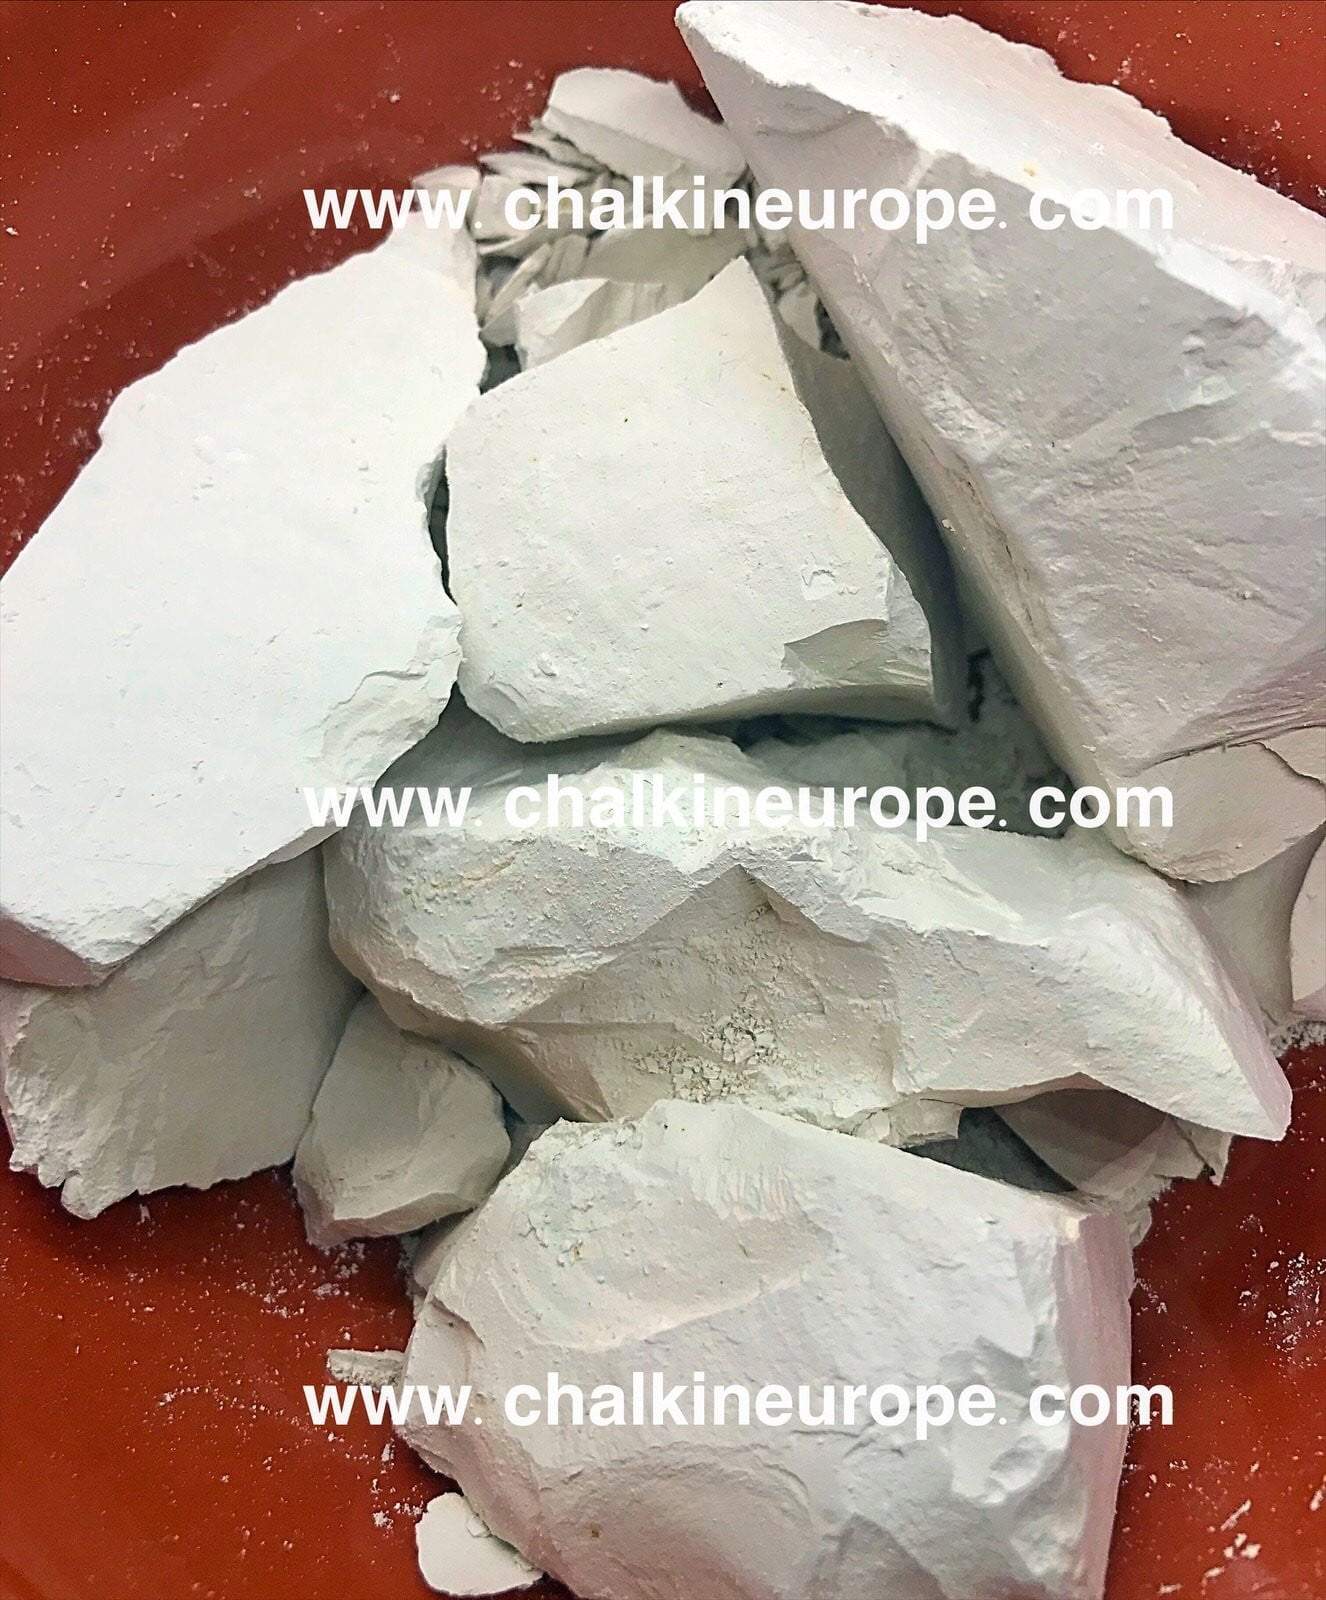 Chalk velho de Oskol - Chalkineurope